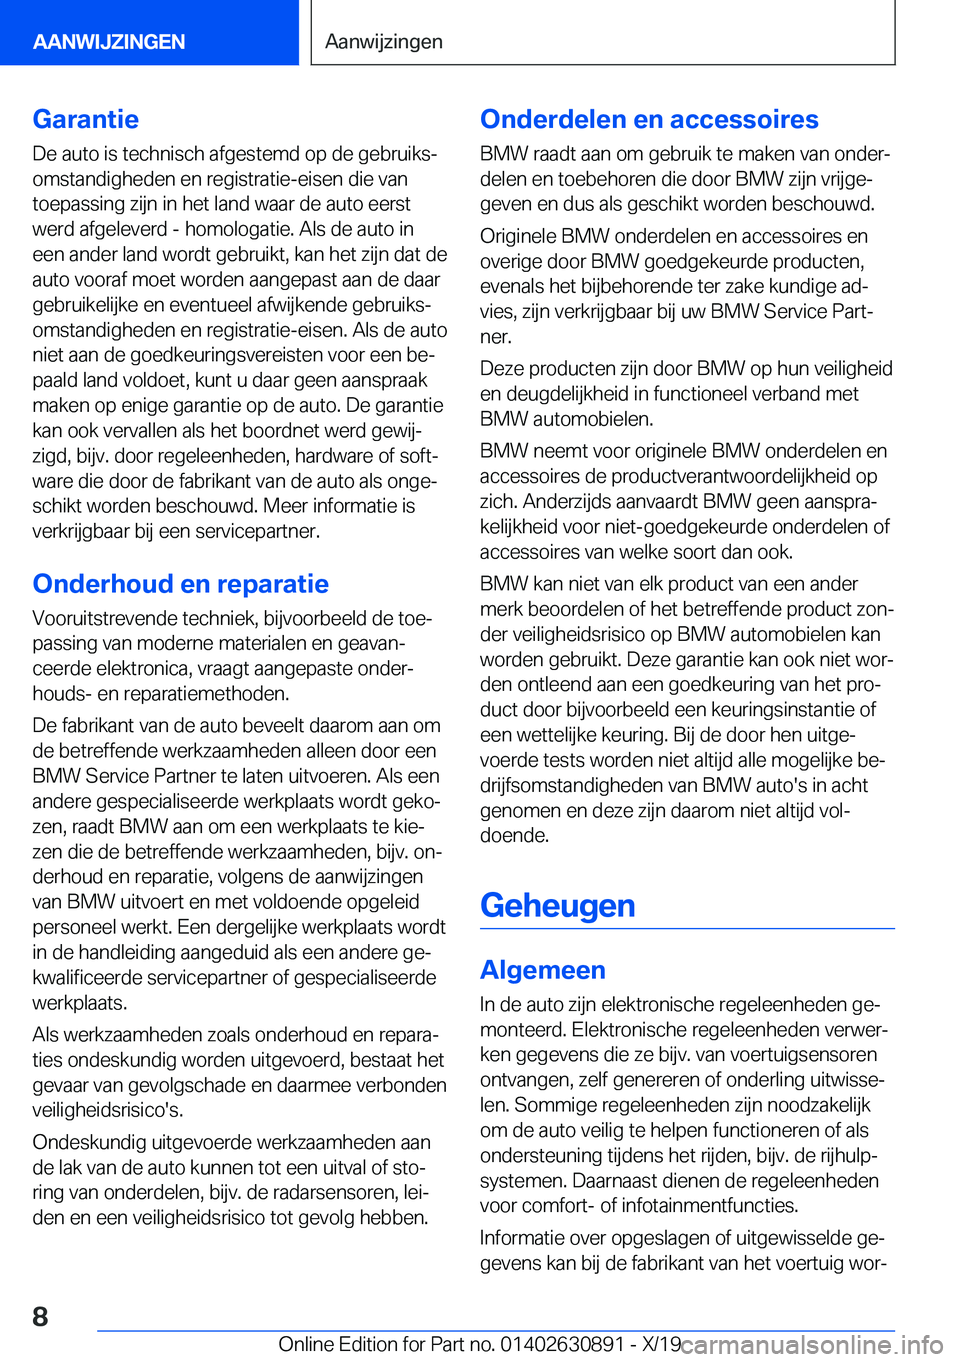 BMW X2 2020  Instructieboekjes (in Dutch) �G�a�r�a�n�t�i�e�D�e��a�u�t�o��i�s��t�e�c�h�n�i�s�c�h��a�f�g�e�s�t�e�m�d��o�p��d�e��g�e�b�r�u�i�k�sj
�o�m�s�t�a�n�d�i�g�h�e�d�e�n��e�n��r�e�g�i�s�t�r�a�t�i�e�-�e�i�s�e�n��d�i�e��v�a�n �t�o